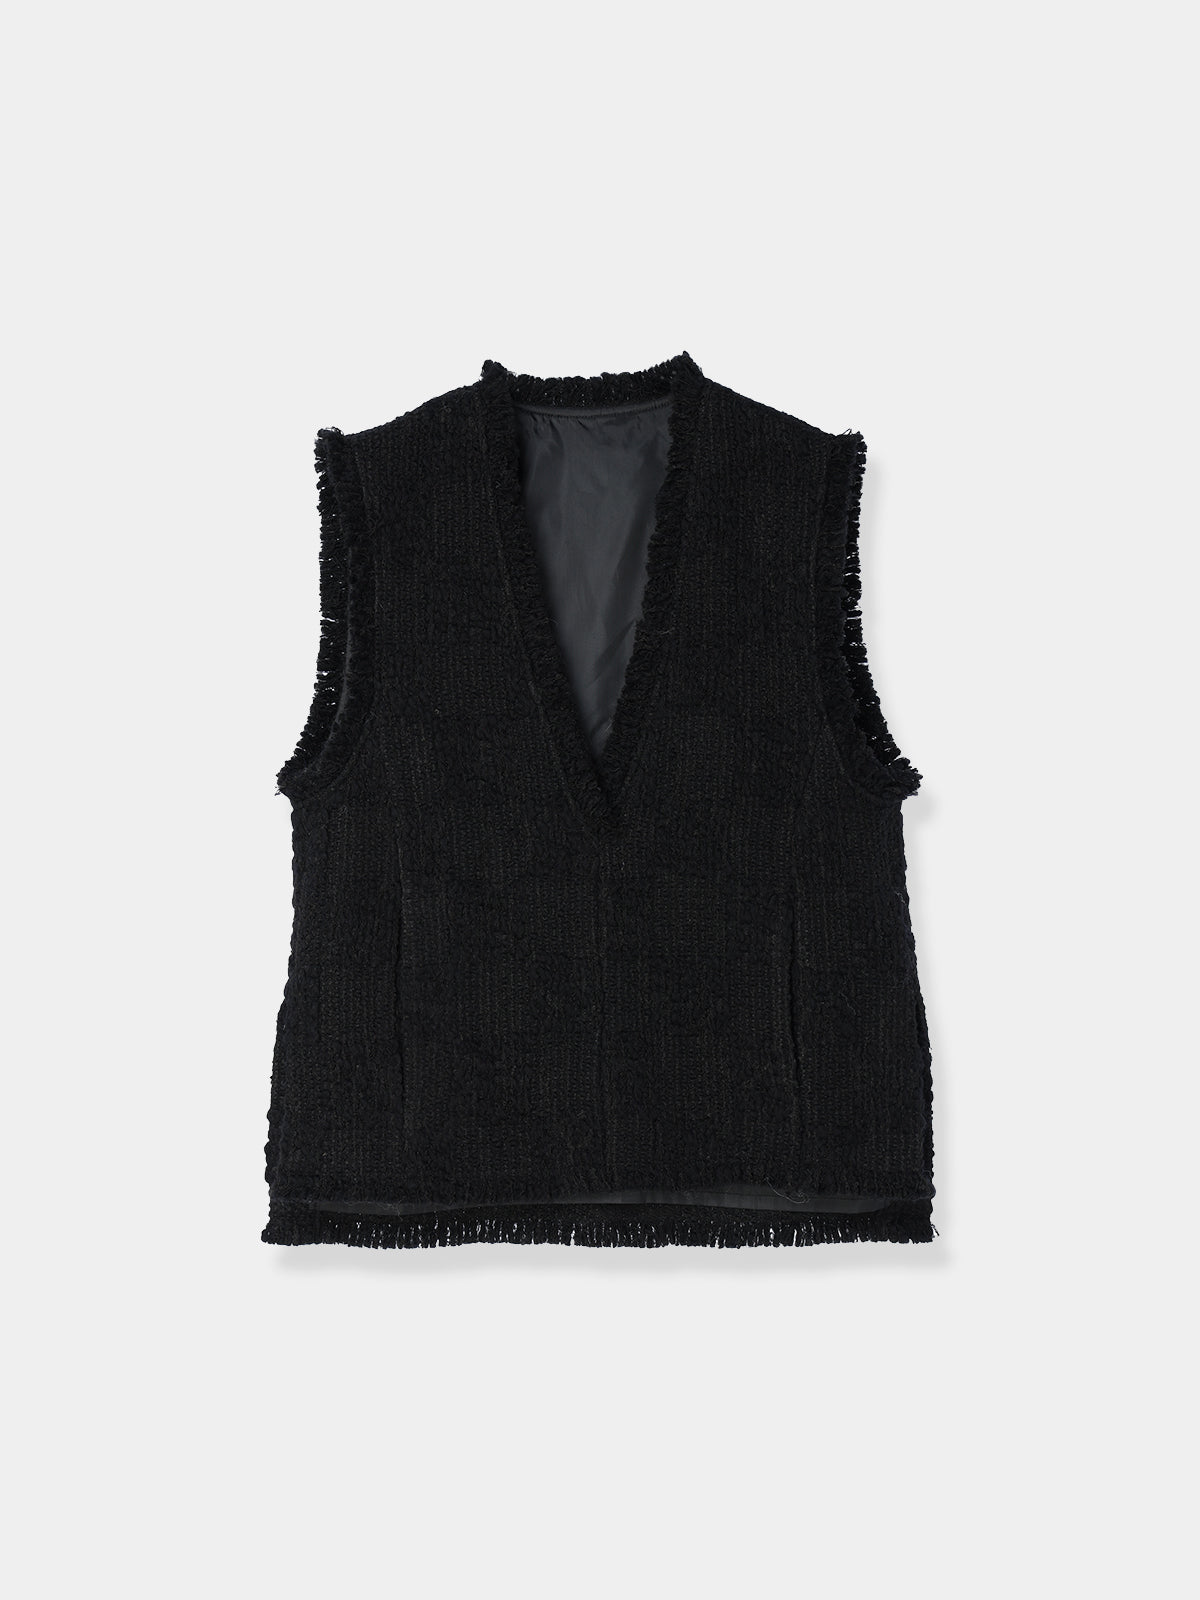 Fringe tweed vest